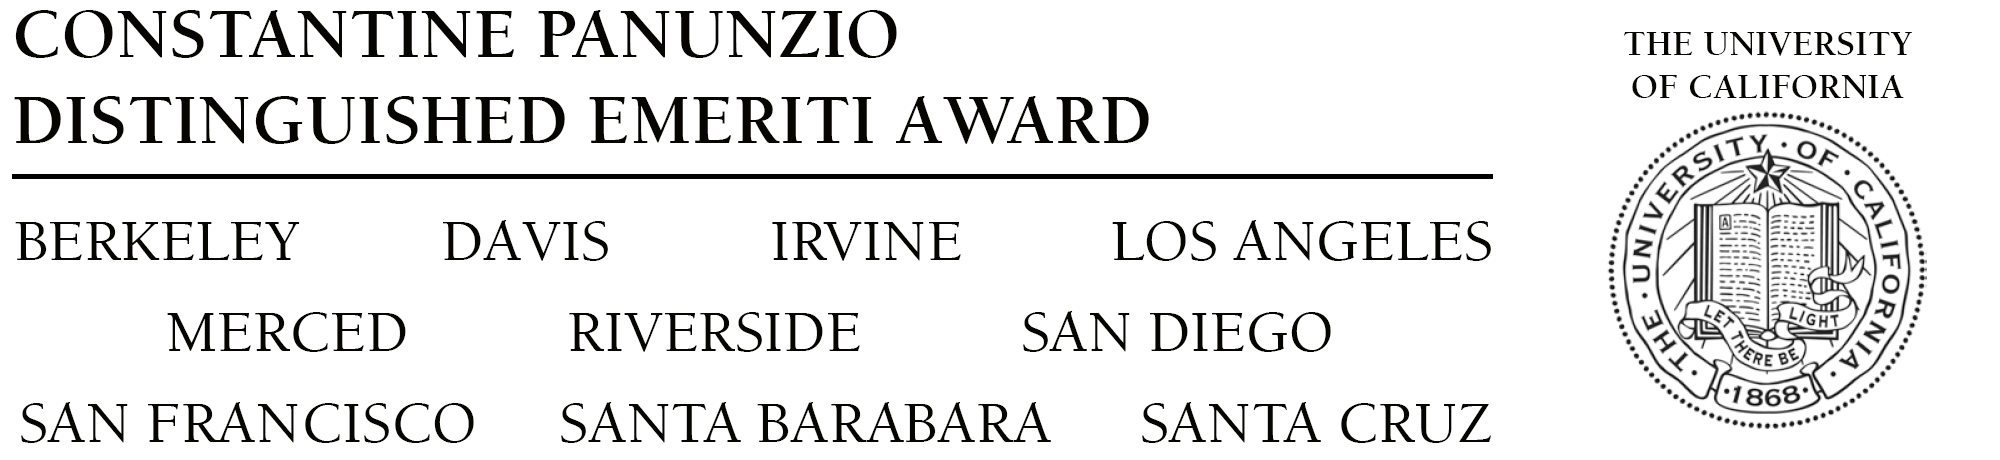 Panunzio Award